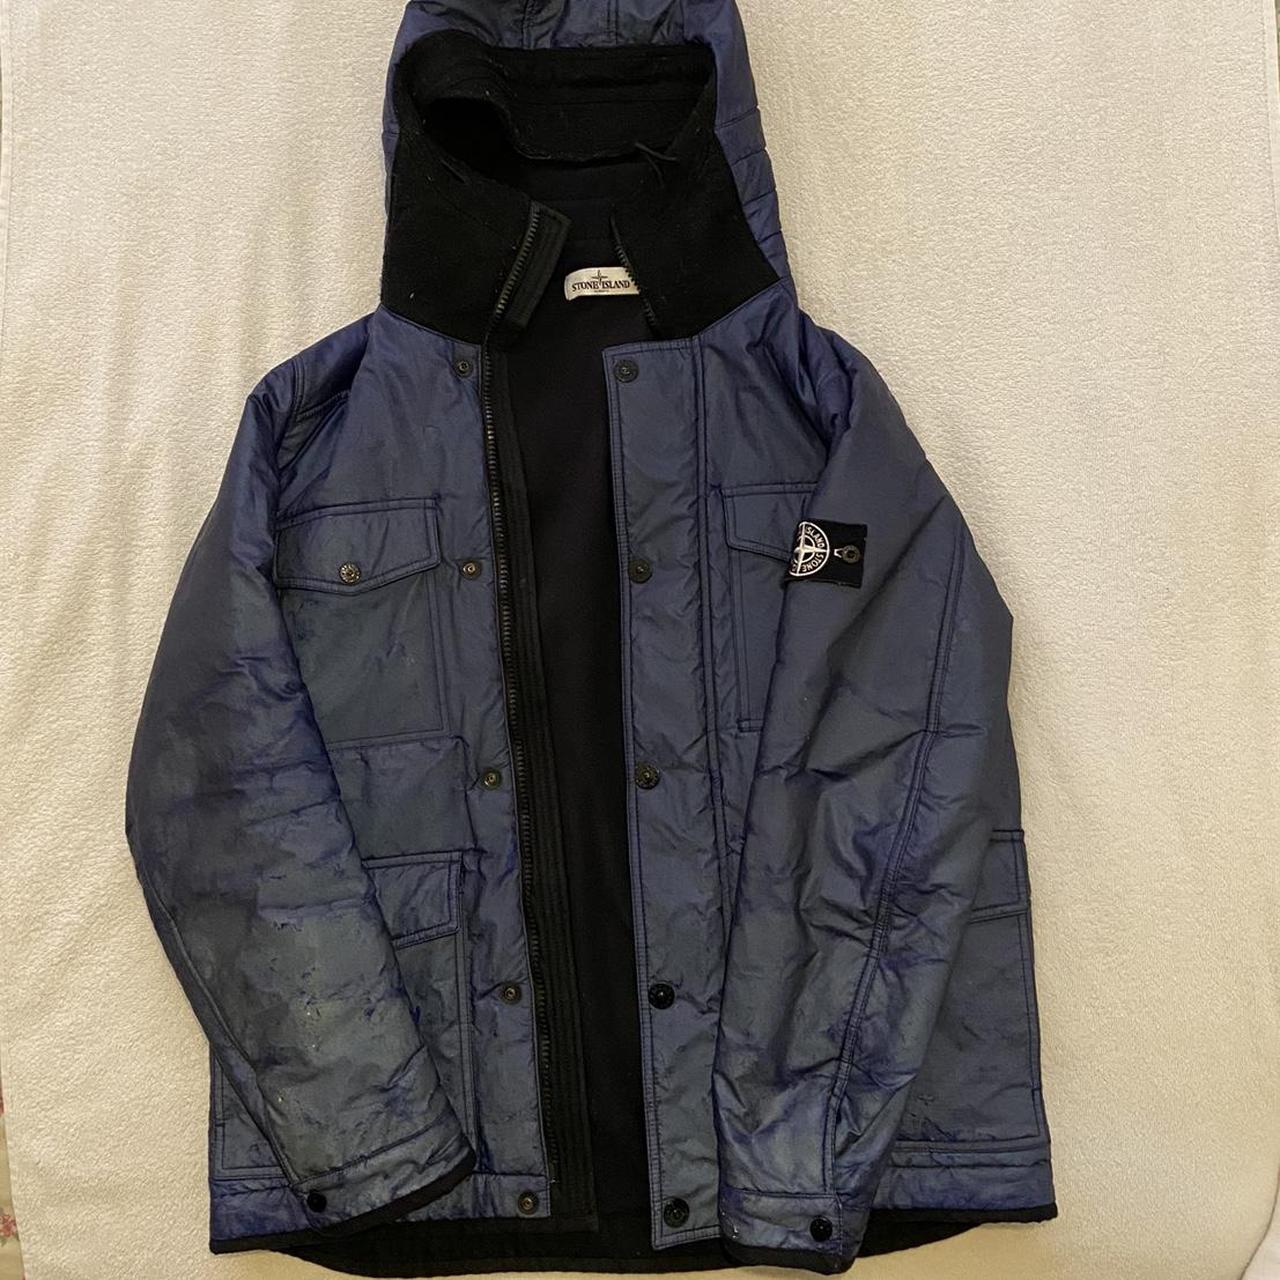 Stone Island reflex mat reflective jacket/coat A/W... - Depop